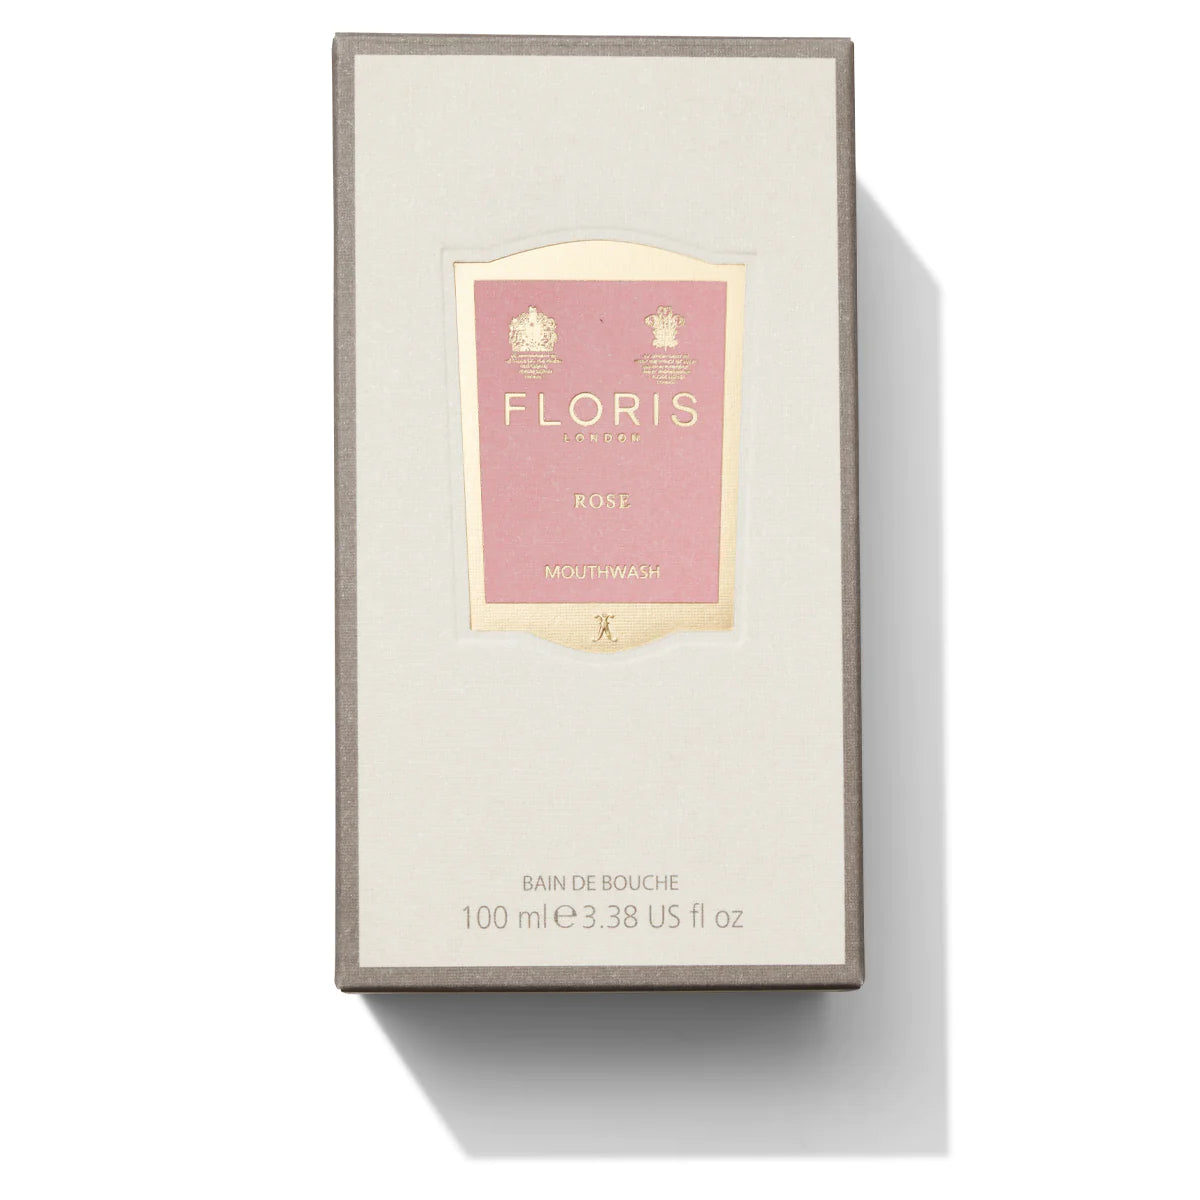 Floris London Rose Mouthwash 100ml Box